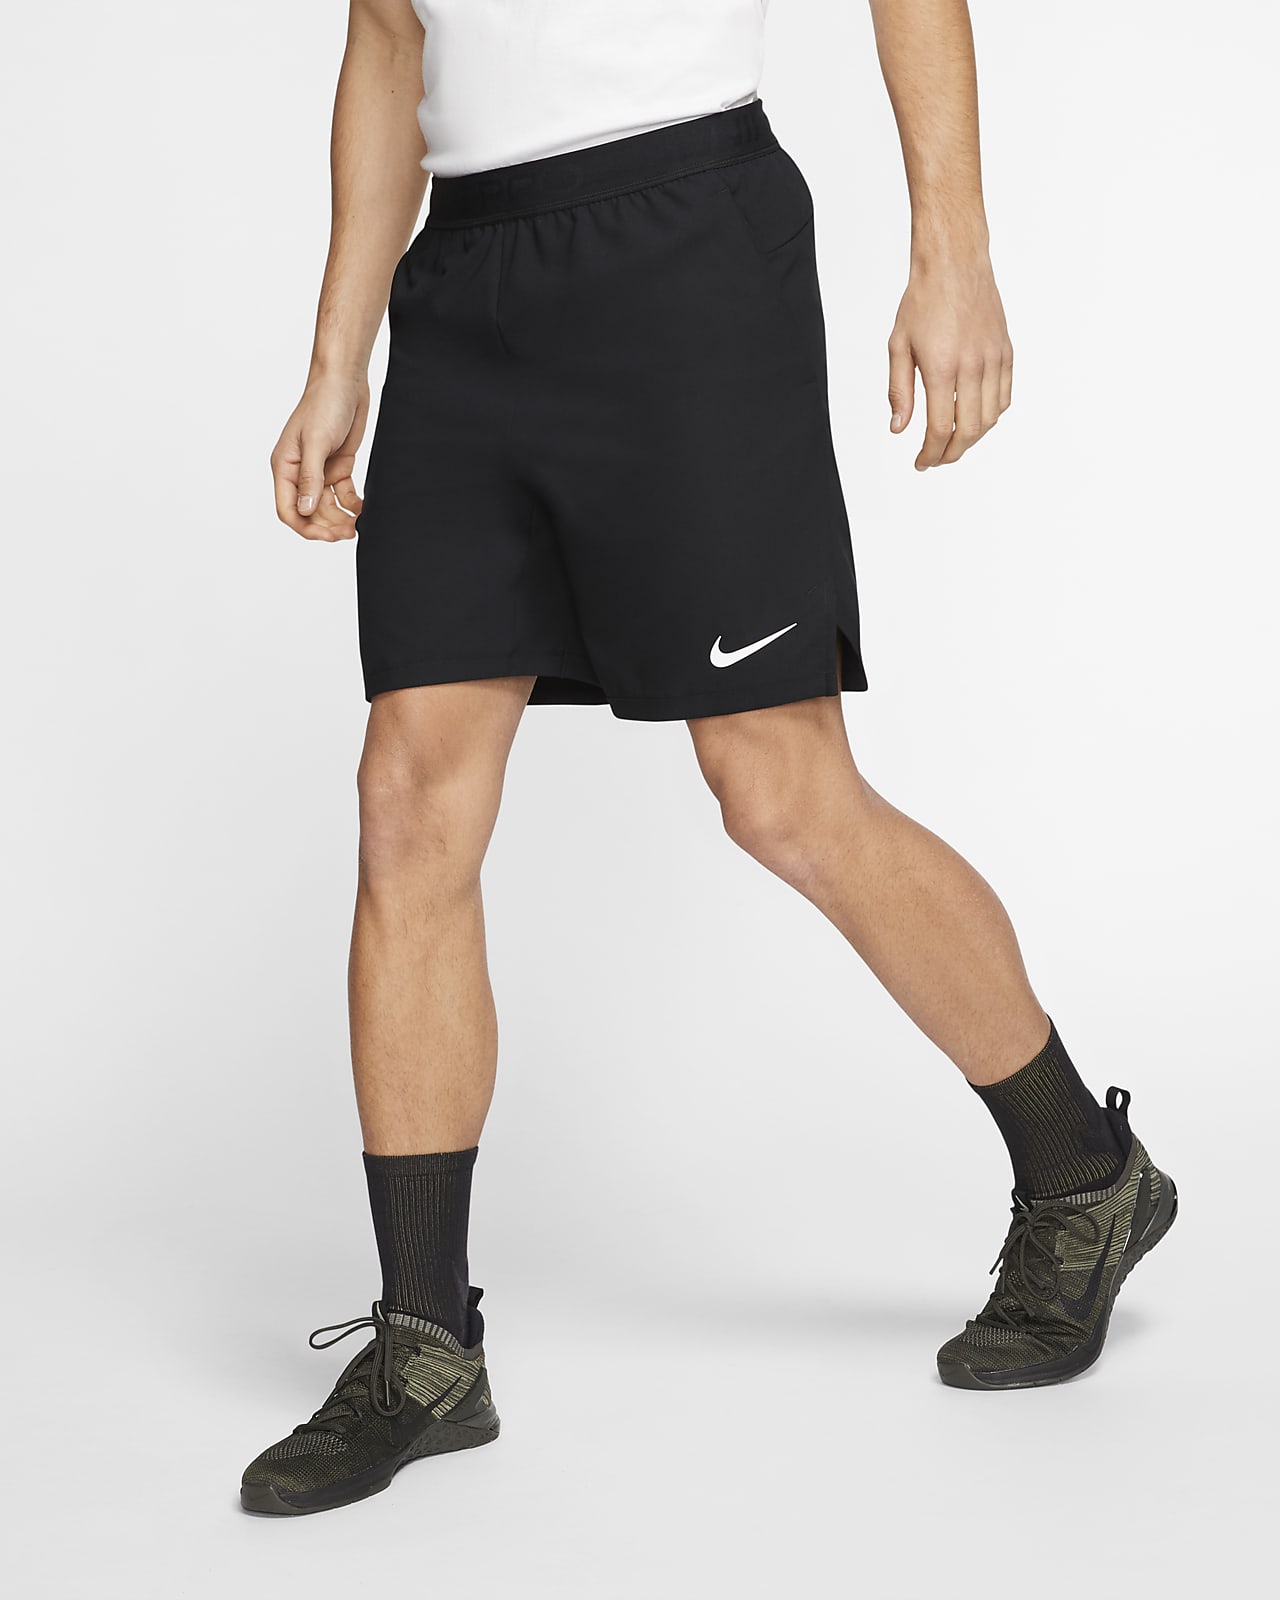 Nike Pro Flex 男款短褲。Nike TW